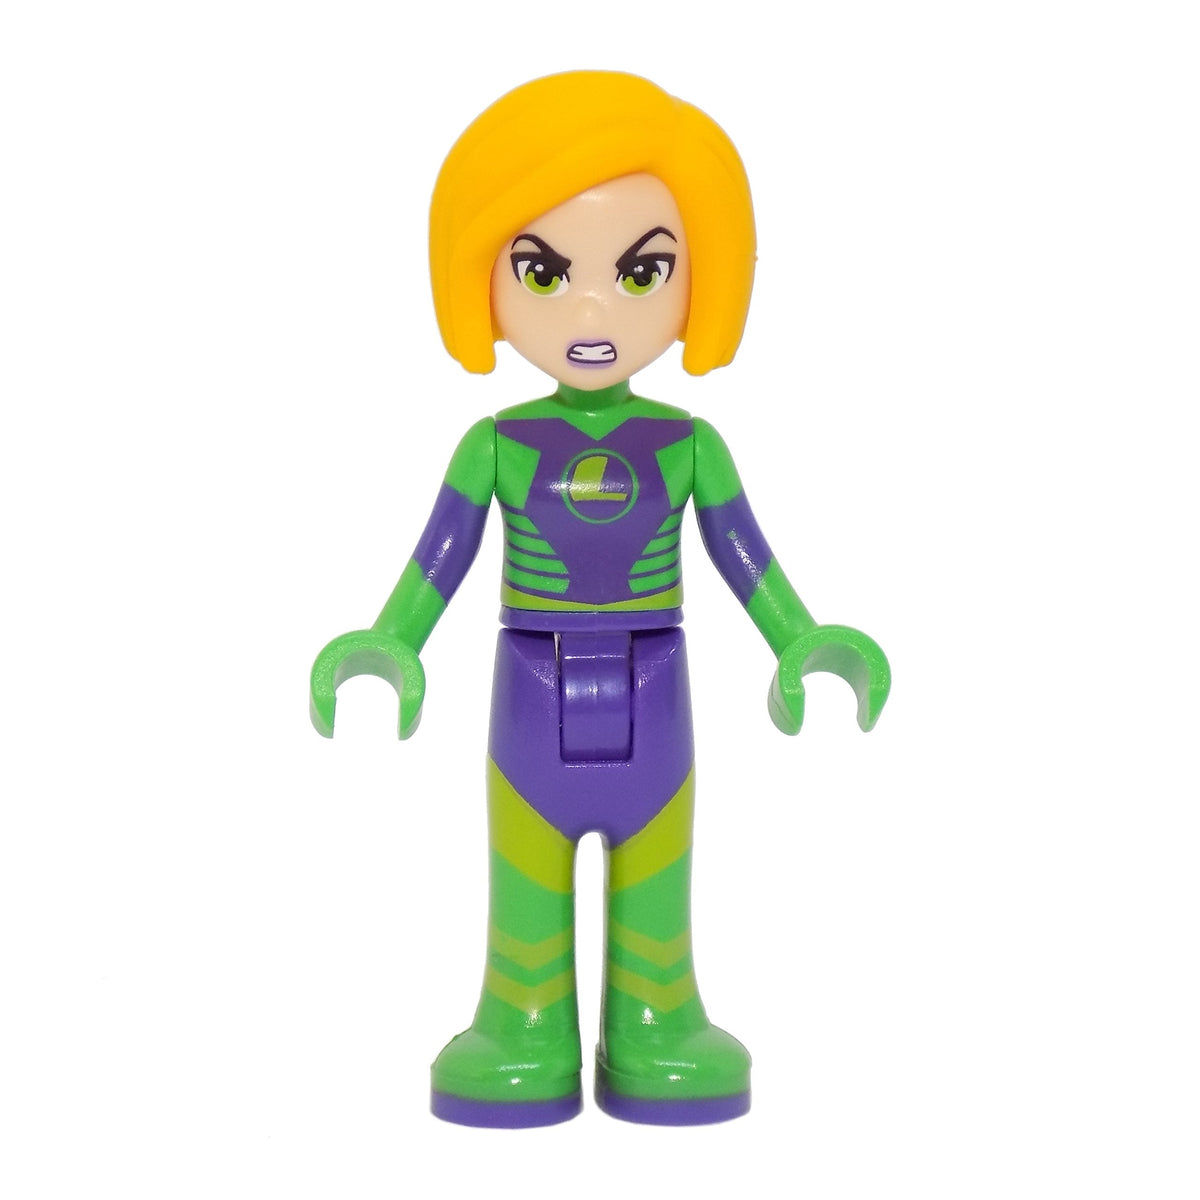 LEGO DC Super Hero Girls: Lena Luthor Minifigure